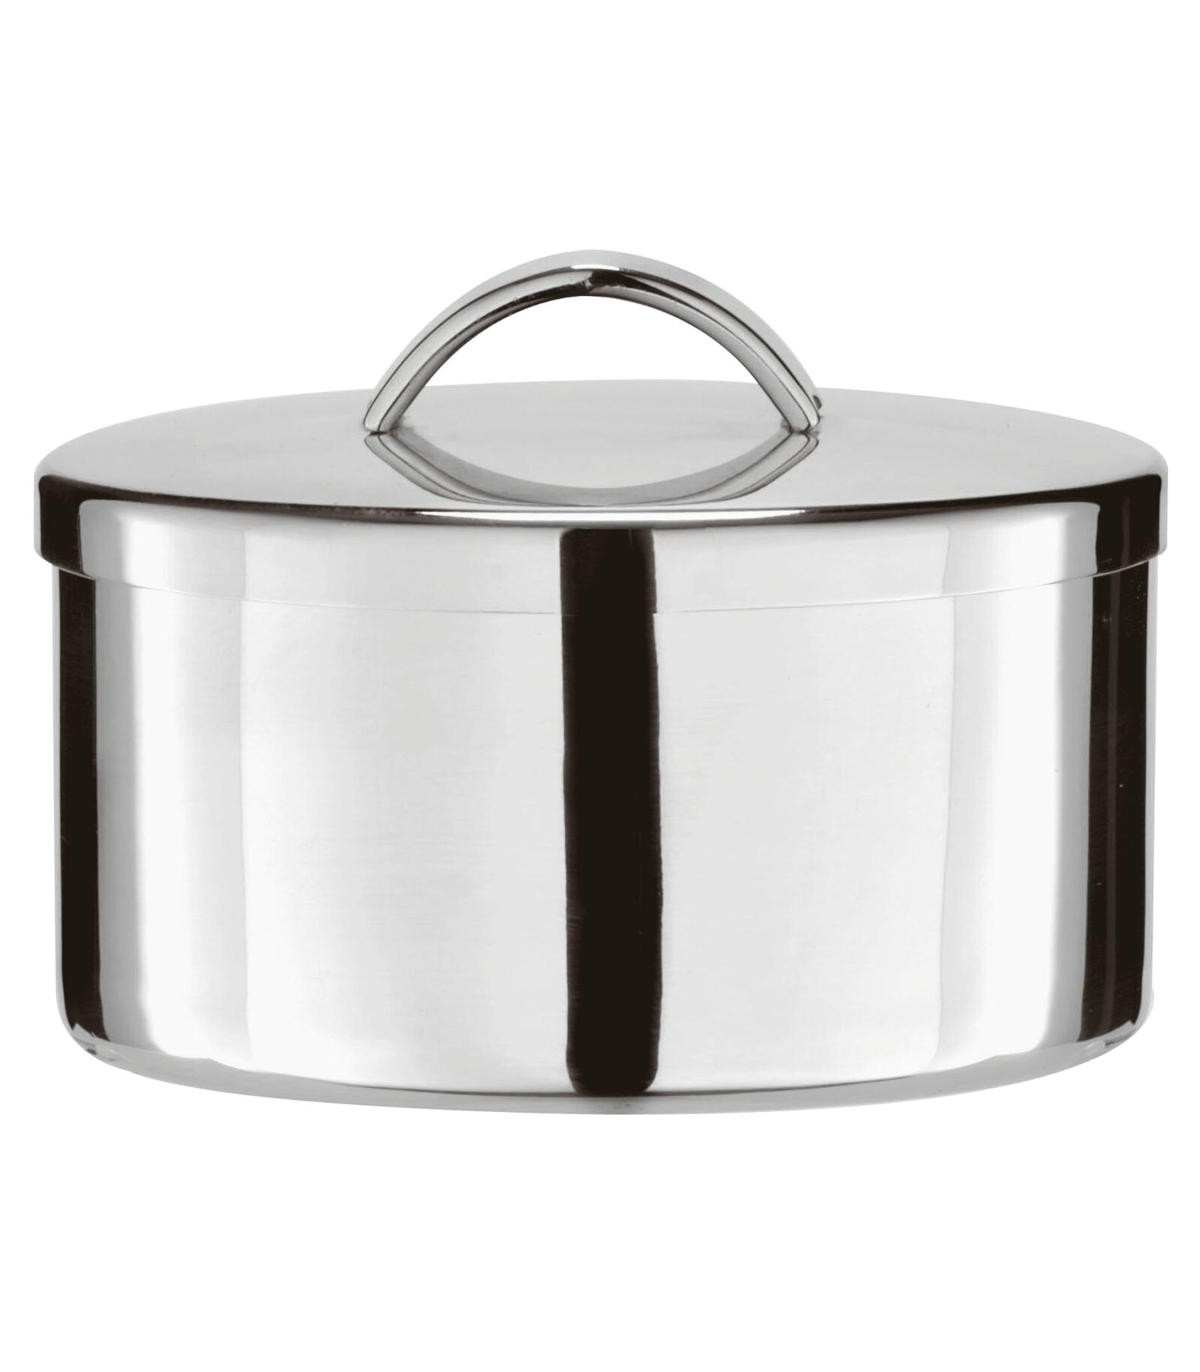 Insulated stainless steel jug : Stellinox